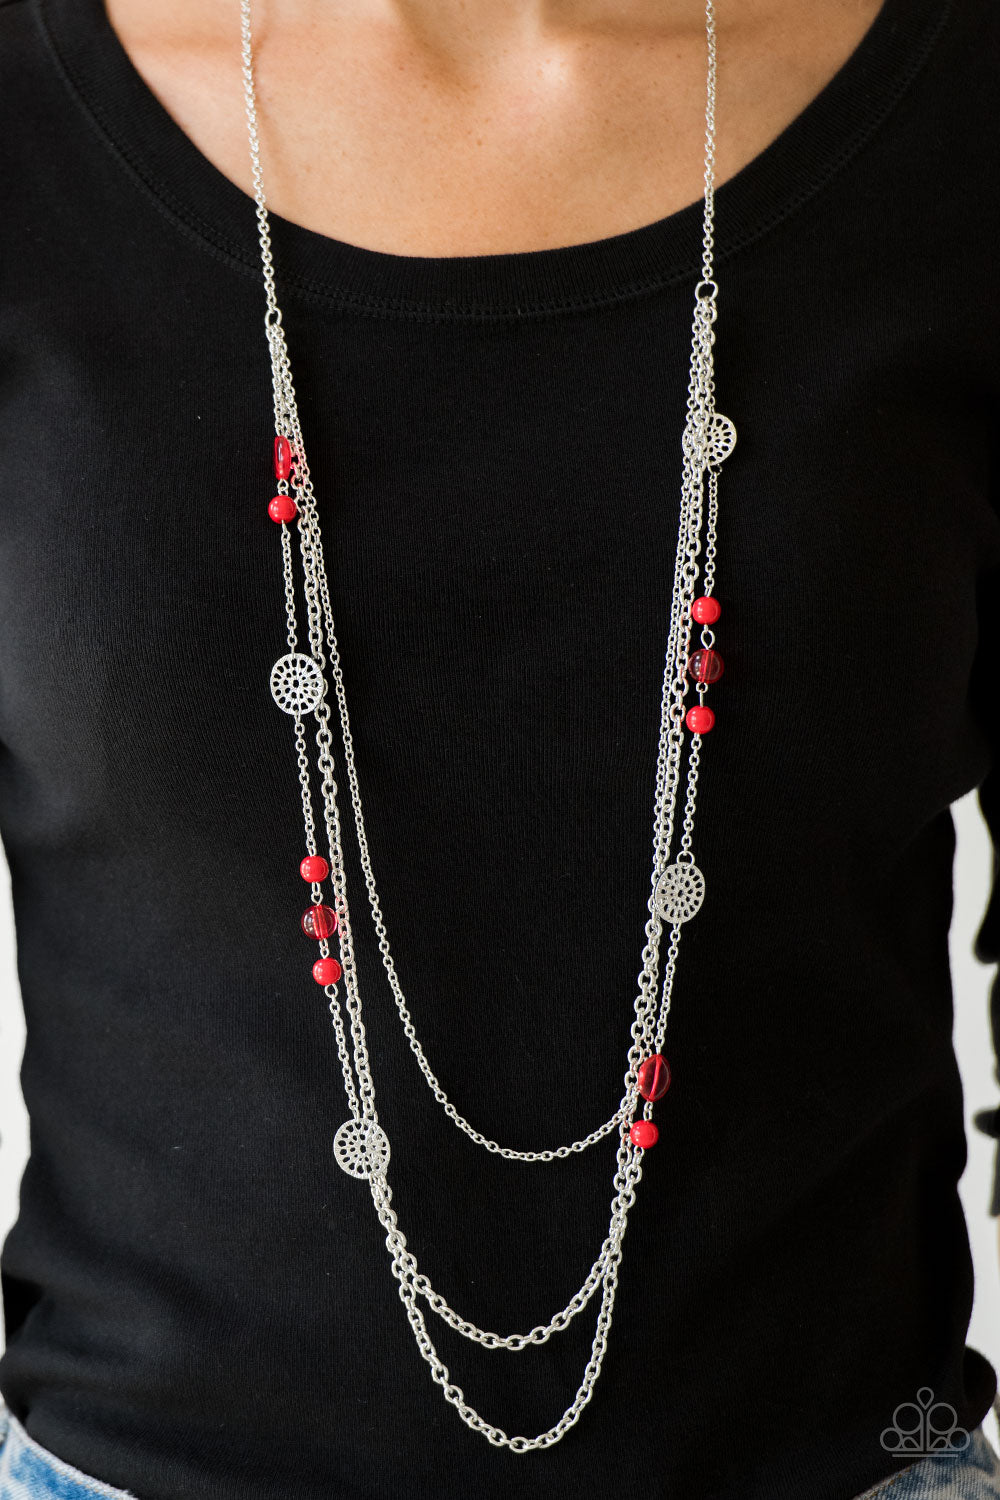 Paparazzi Necklace ~ Pretty Pop-tastic! - Red